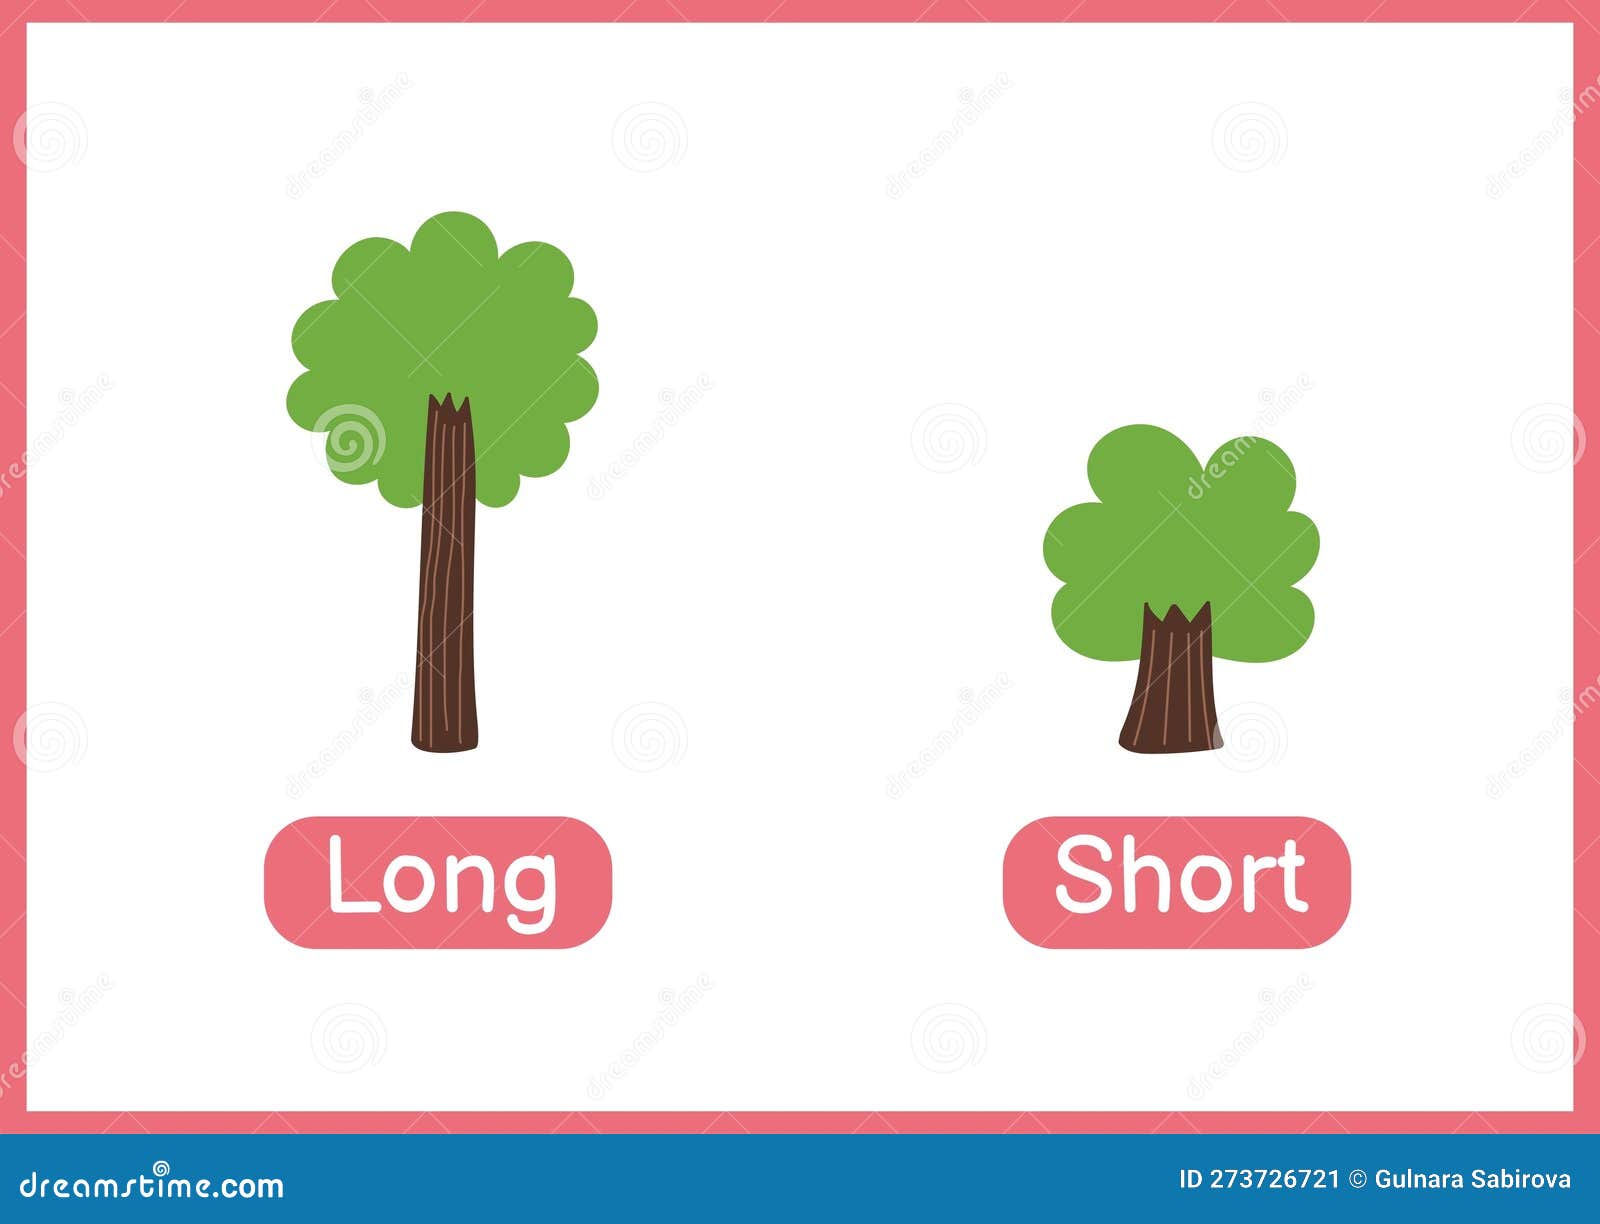 Opposites short. Long short opposites. Long short рисунок. Long short Clipart. Long short логотип.